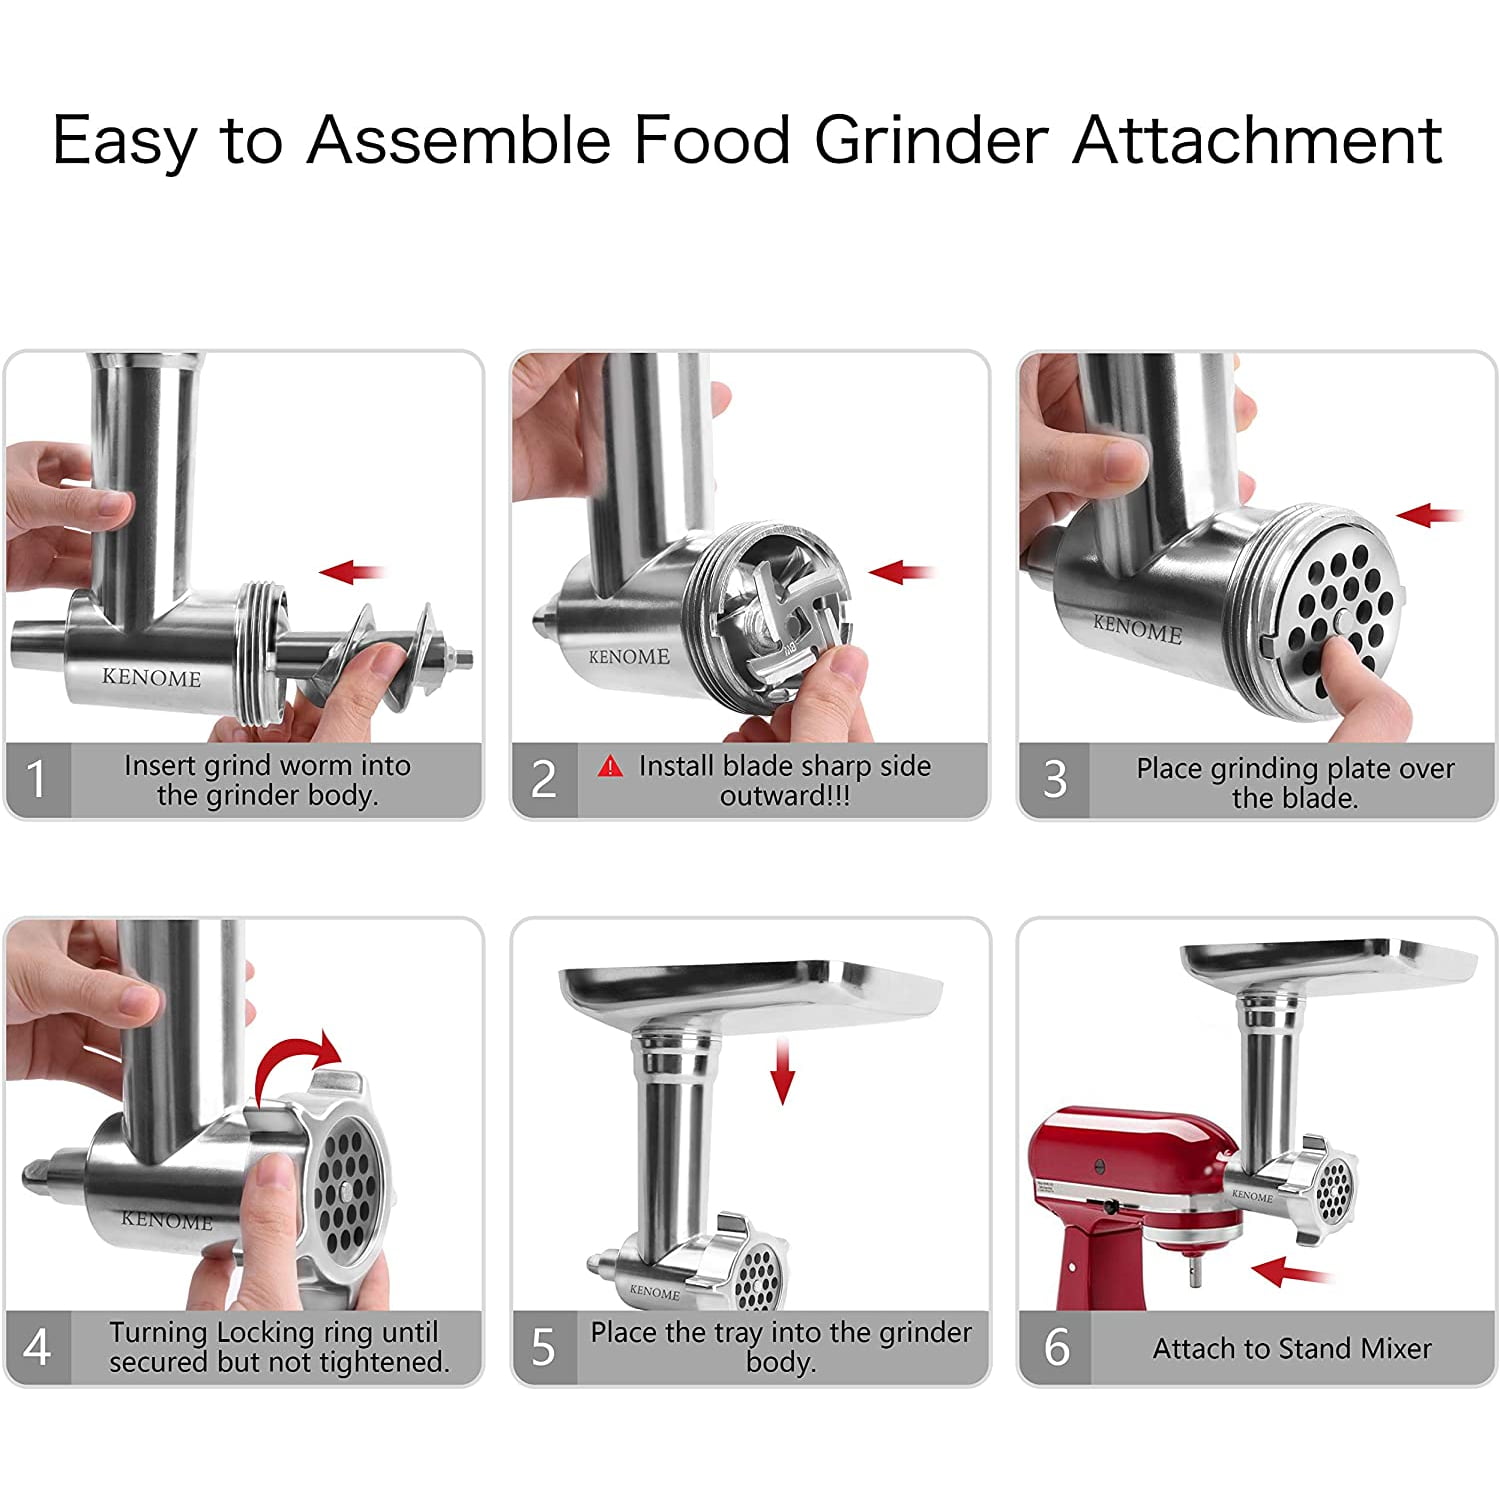 KitchenAid Artisan Series Stand Mixer, 5 Quart, Passion Red & KSMMGA Metal  Food Grinder Attachment, Silver